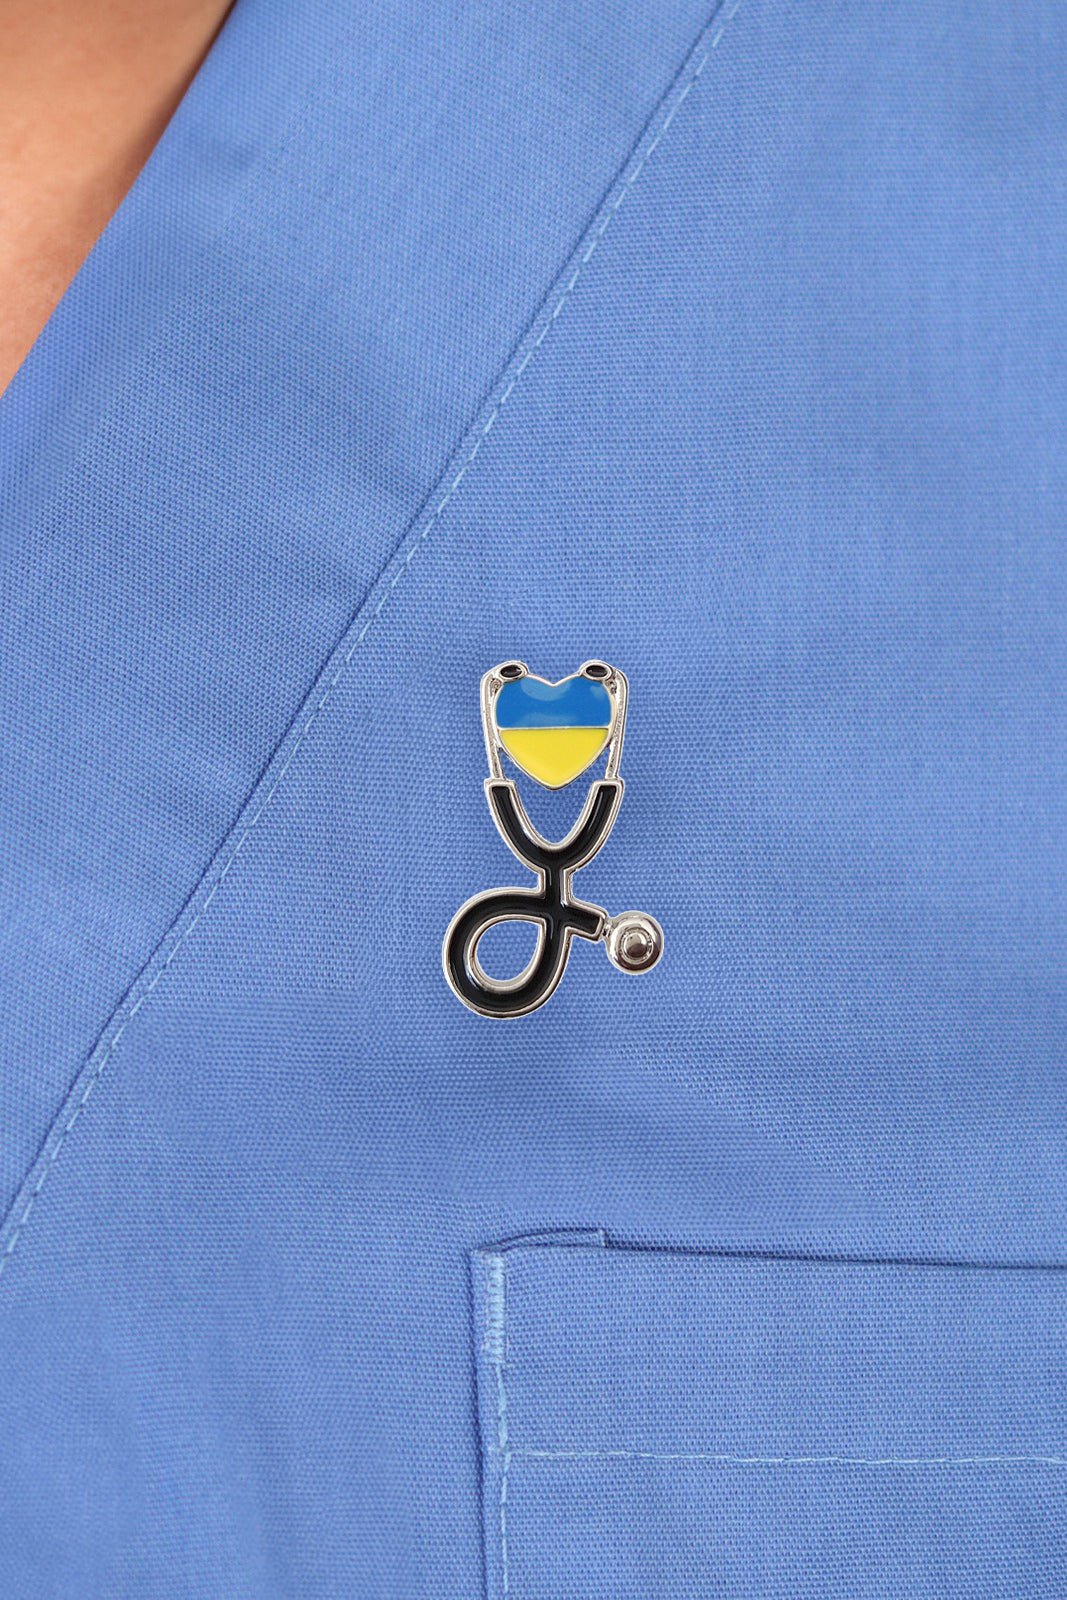 Ukraine Stethoscope flag pin